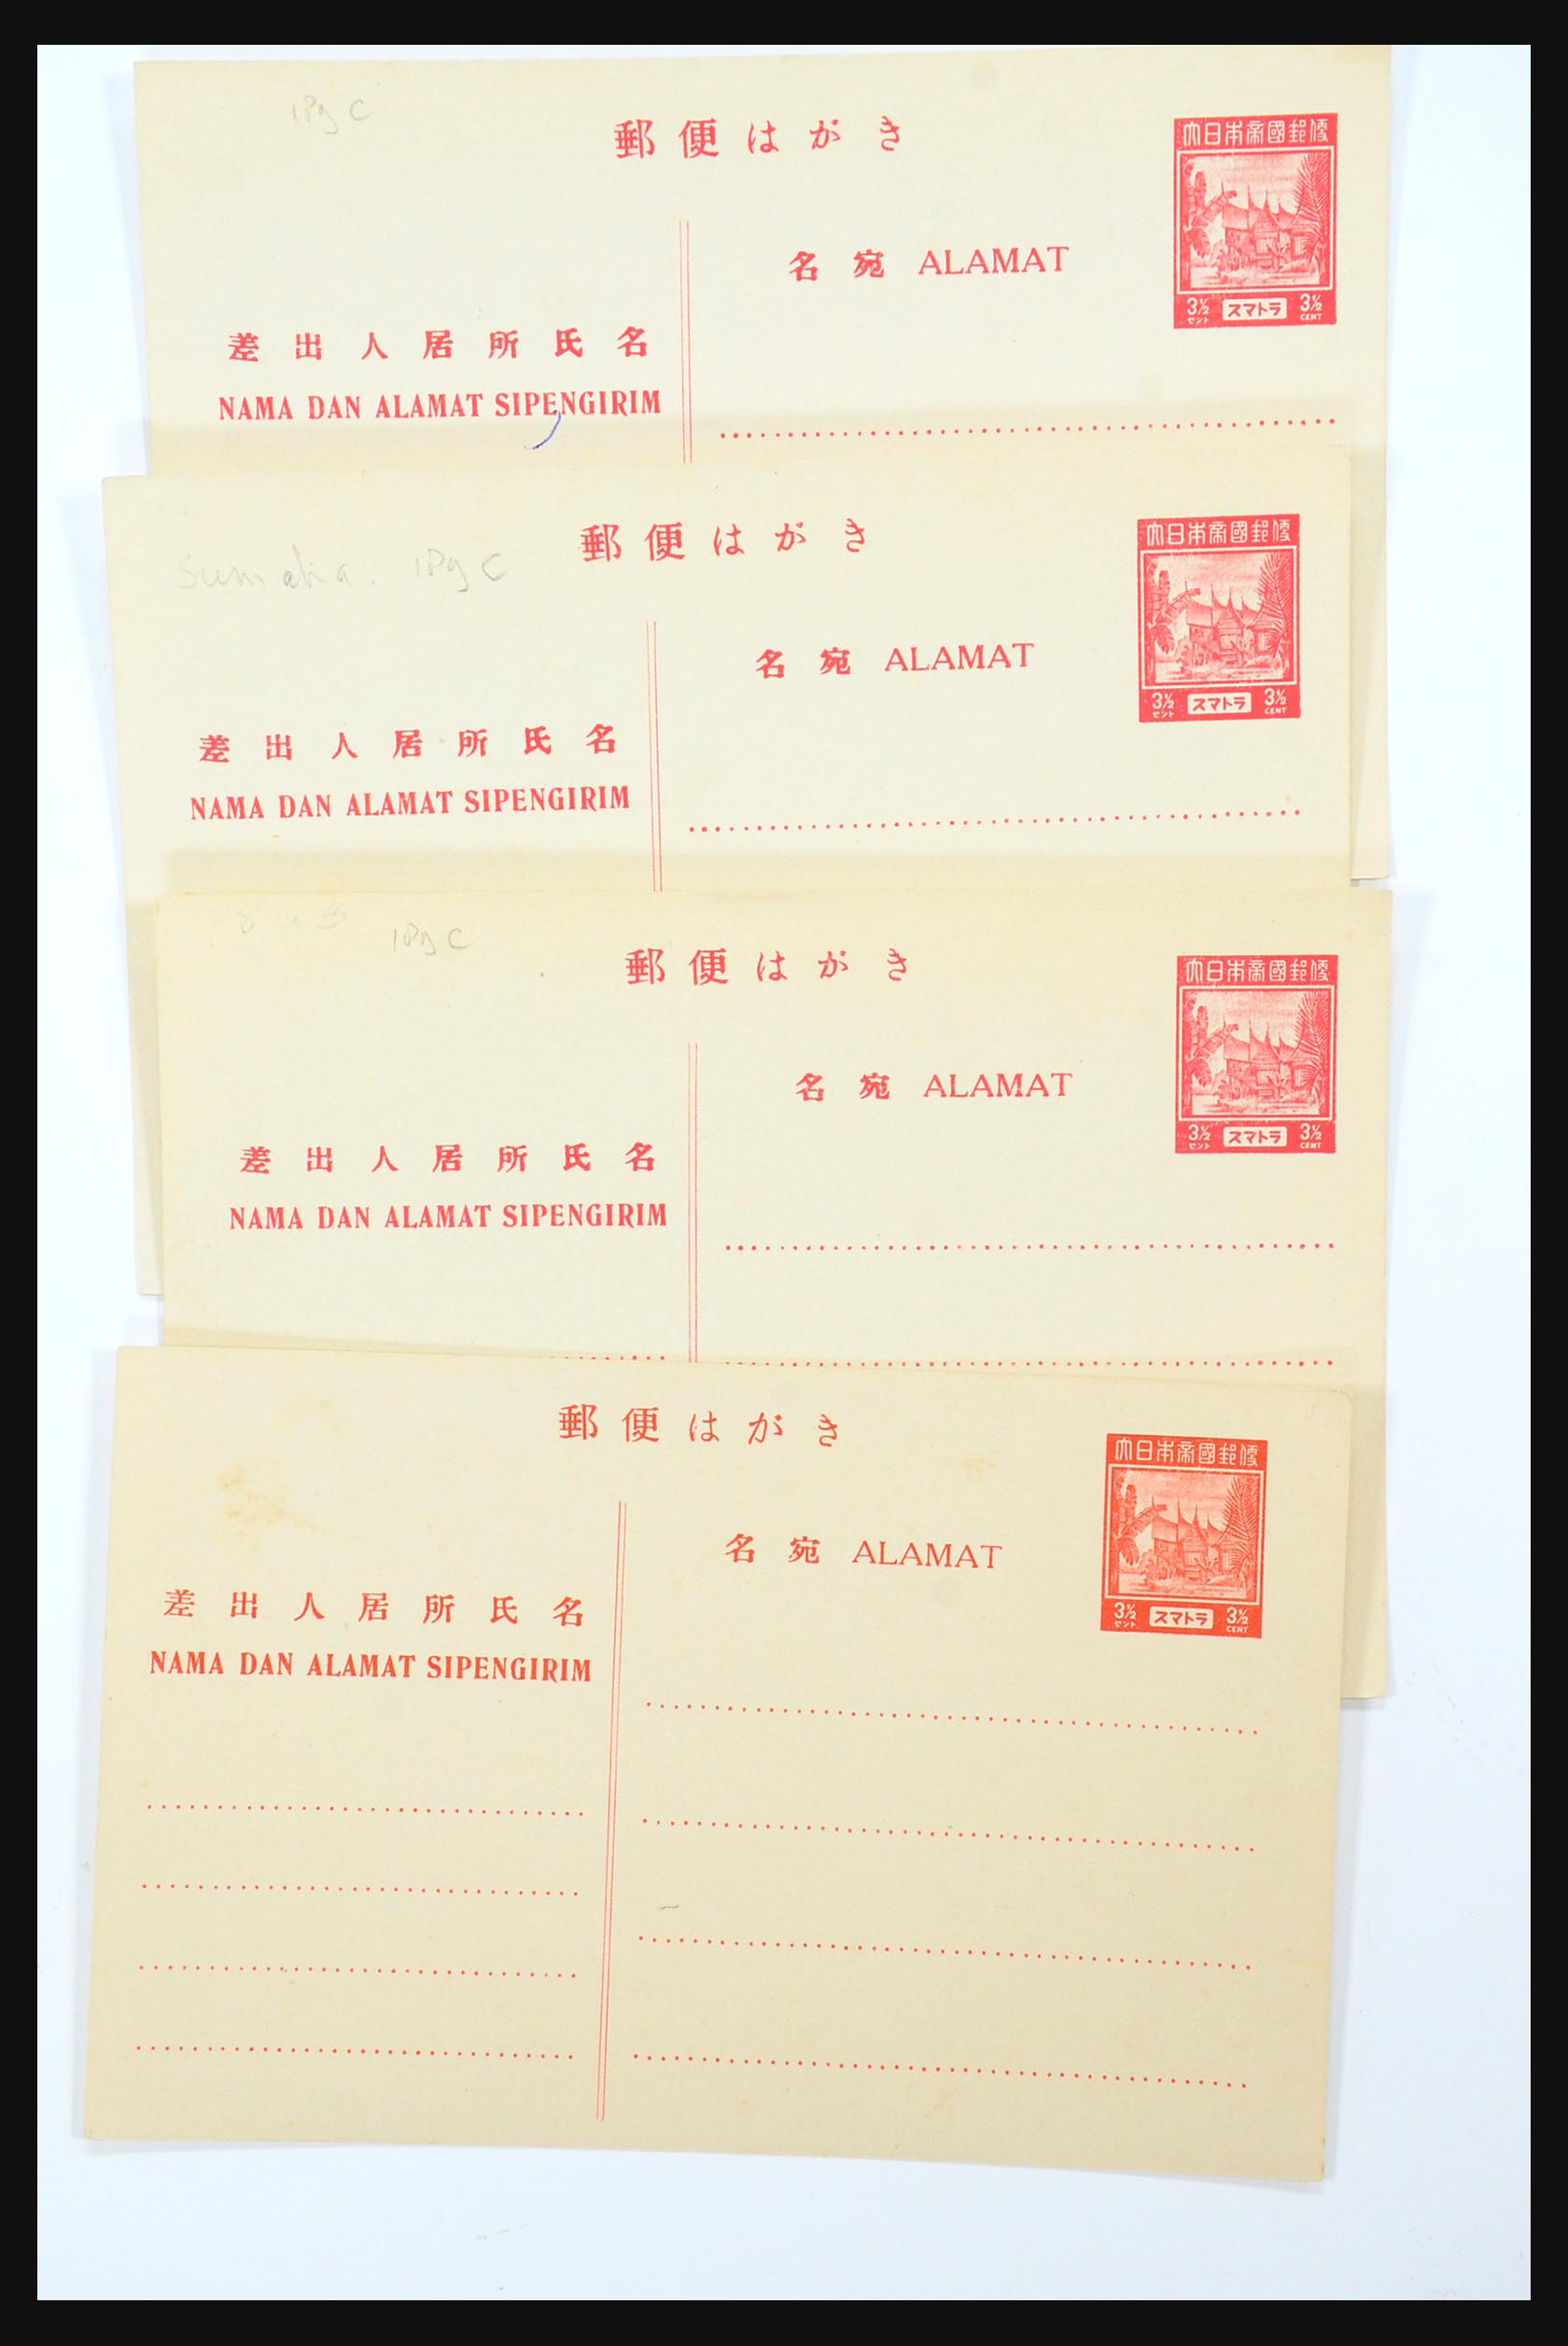 31362 117 - 31362 Nederlands Indië Japanse bezetting brieven 1942-1945.